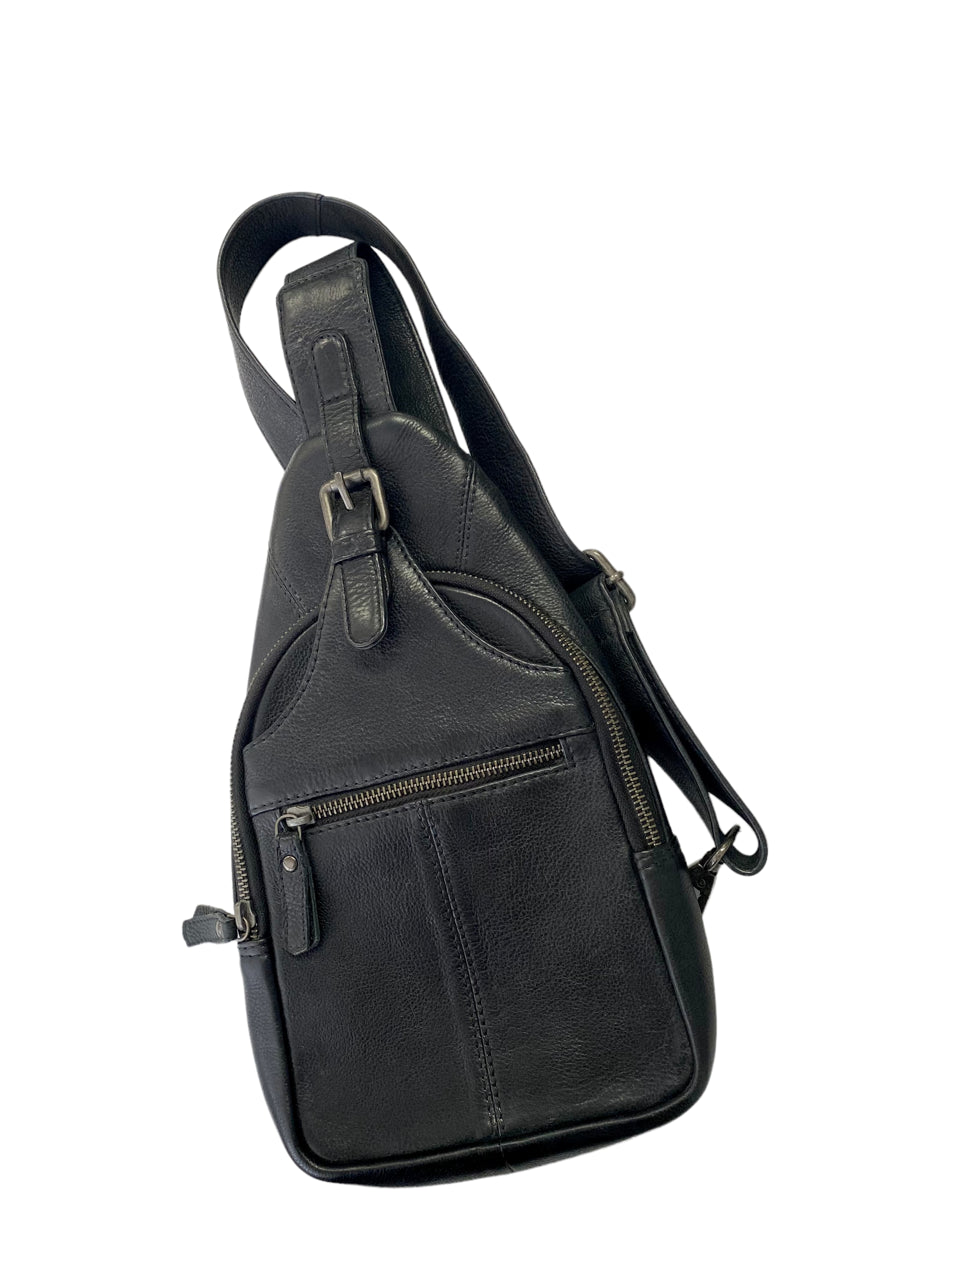 Oran - RH-4605 Mika Leather Sling chest bag - Black